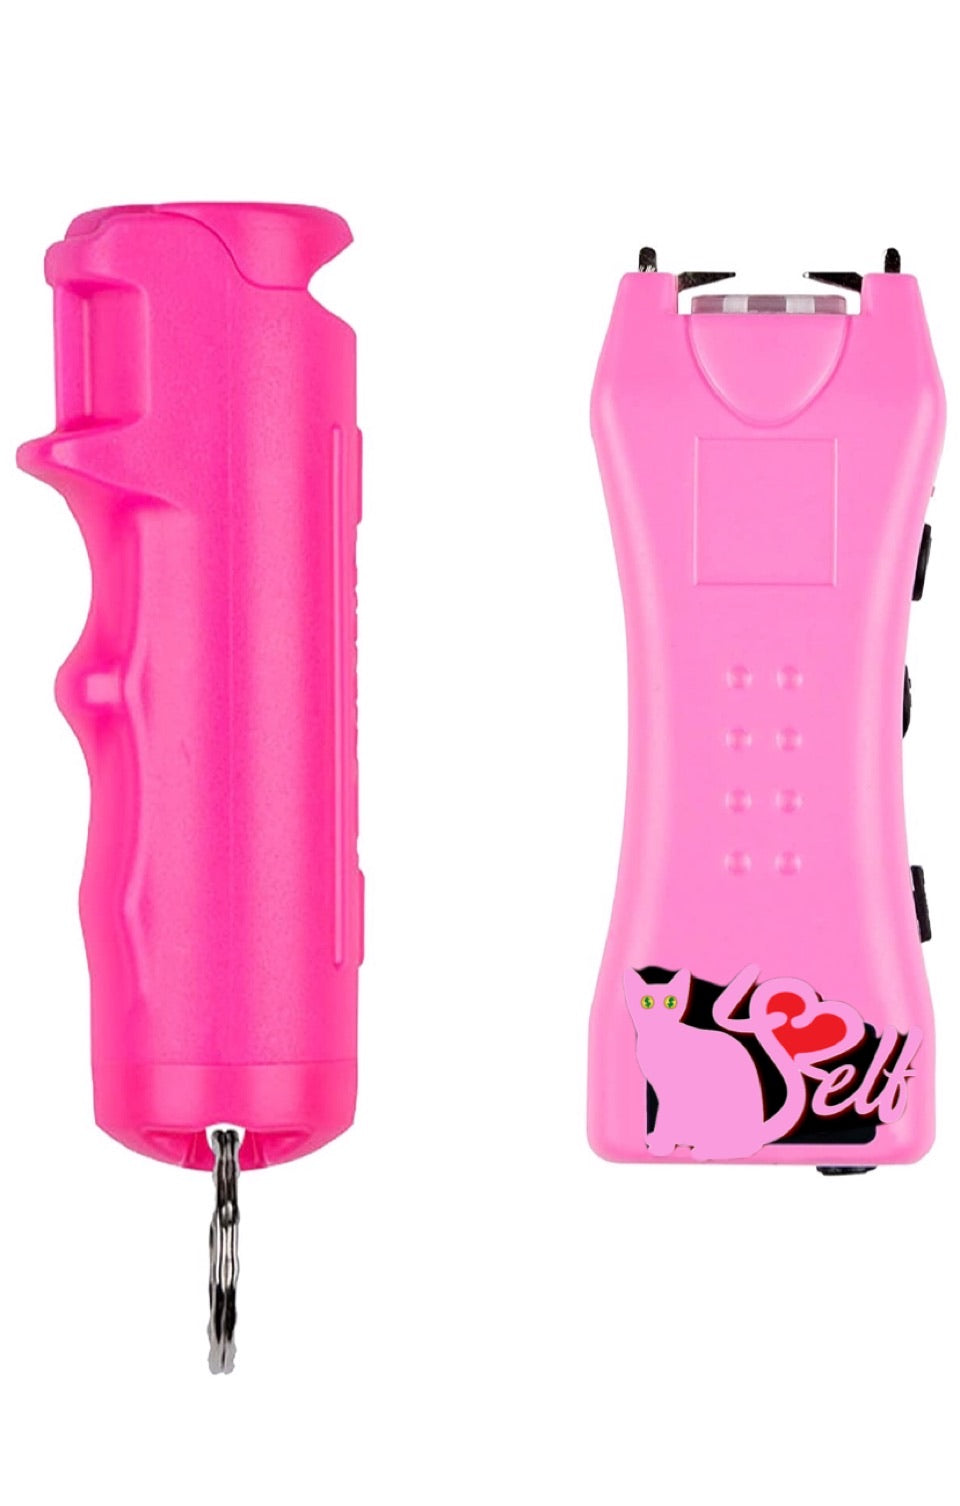 pussy for self pepper spray taser kit available pink